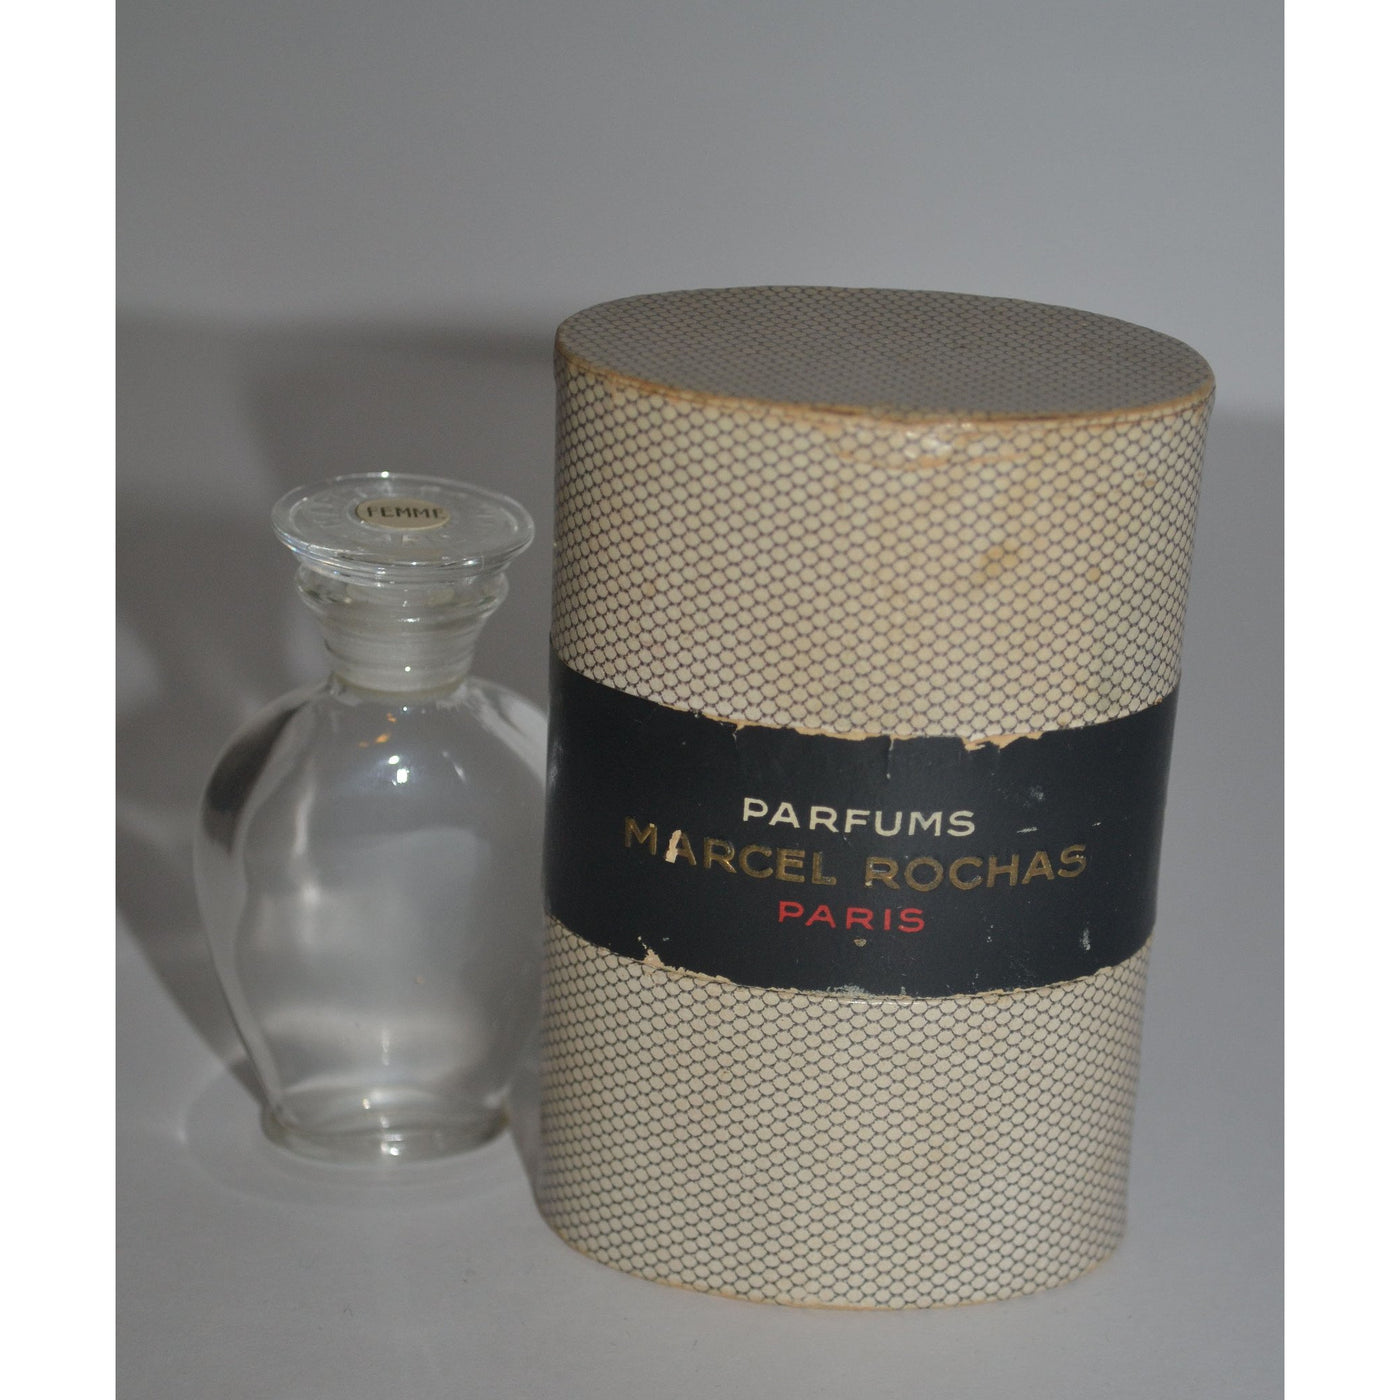 Vintage Femme Parfum By Marcel Rochas